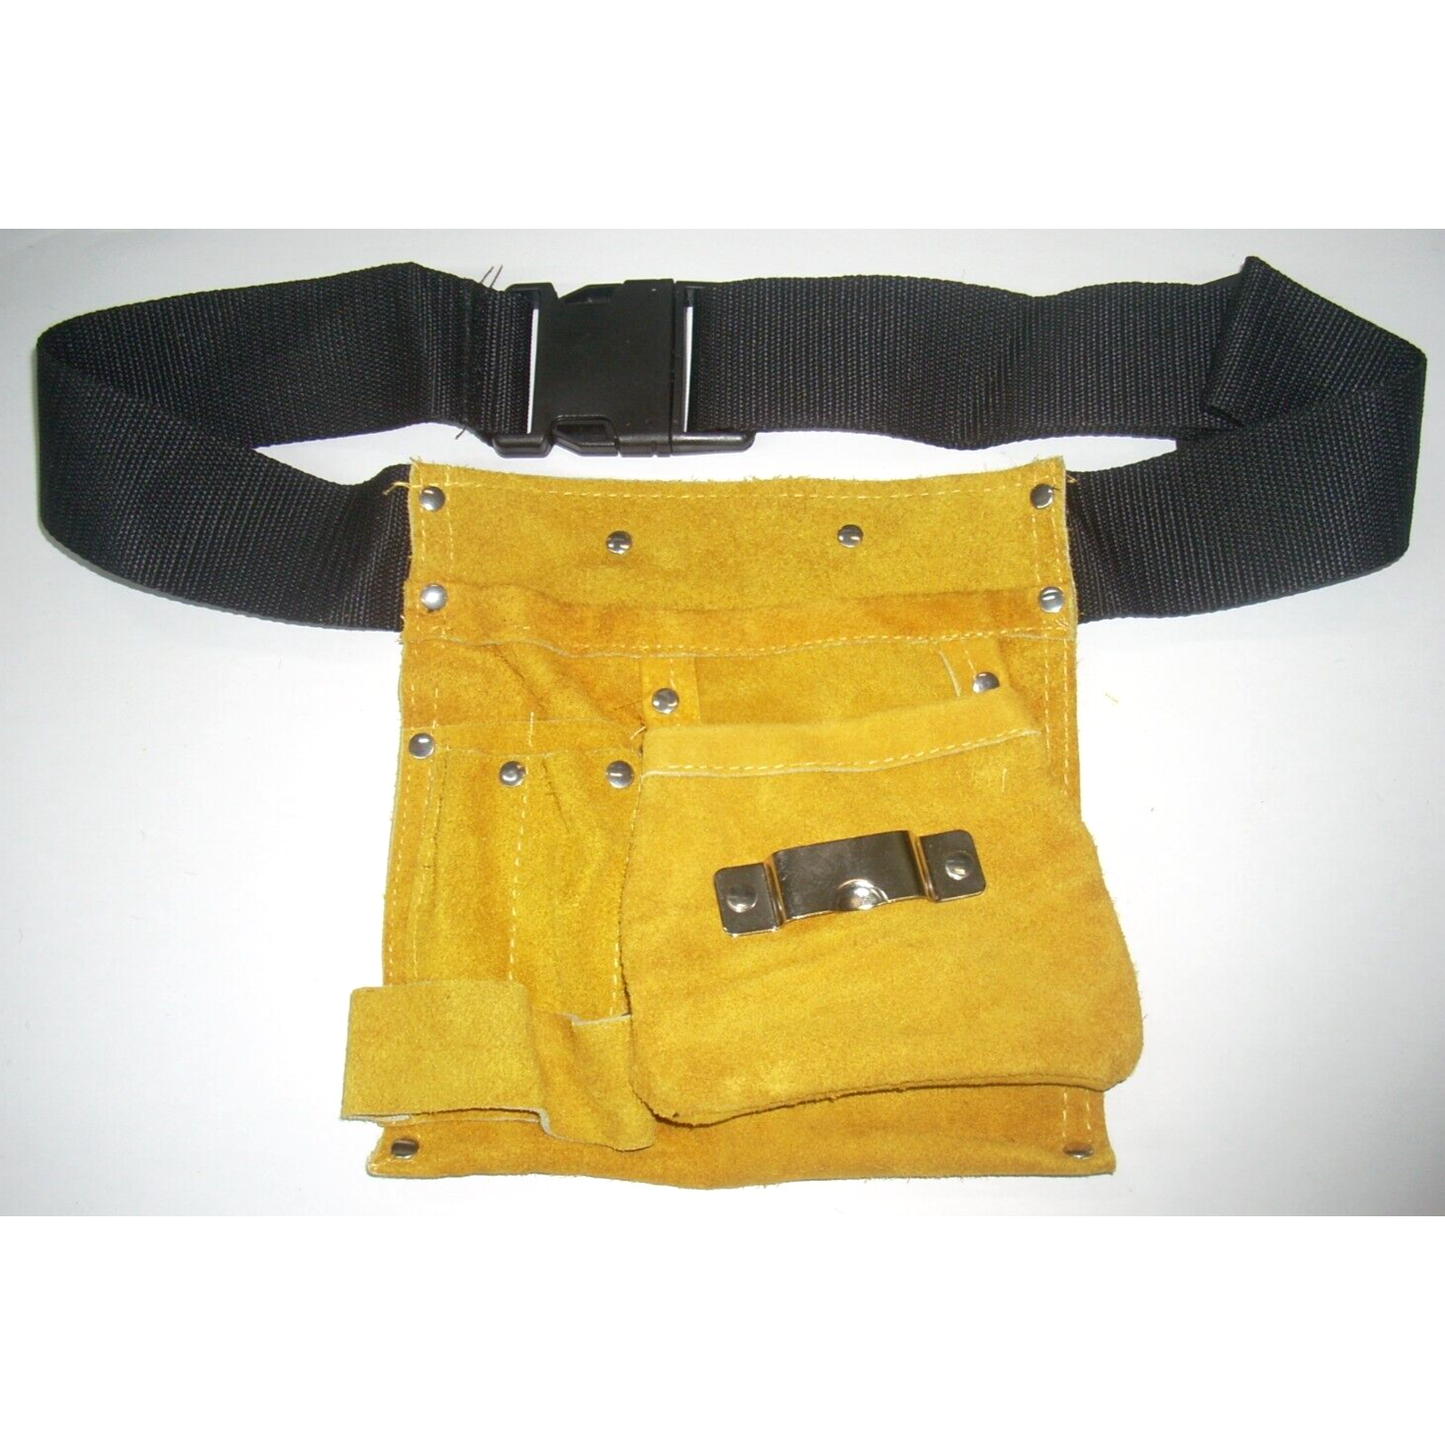 Leather Tool Belt 7 Pockets Straps 7 in W x 7 in H w Adjustable Belt 46" Long